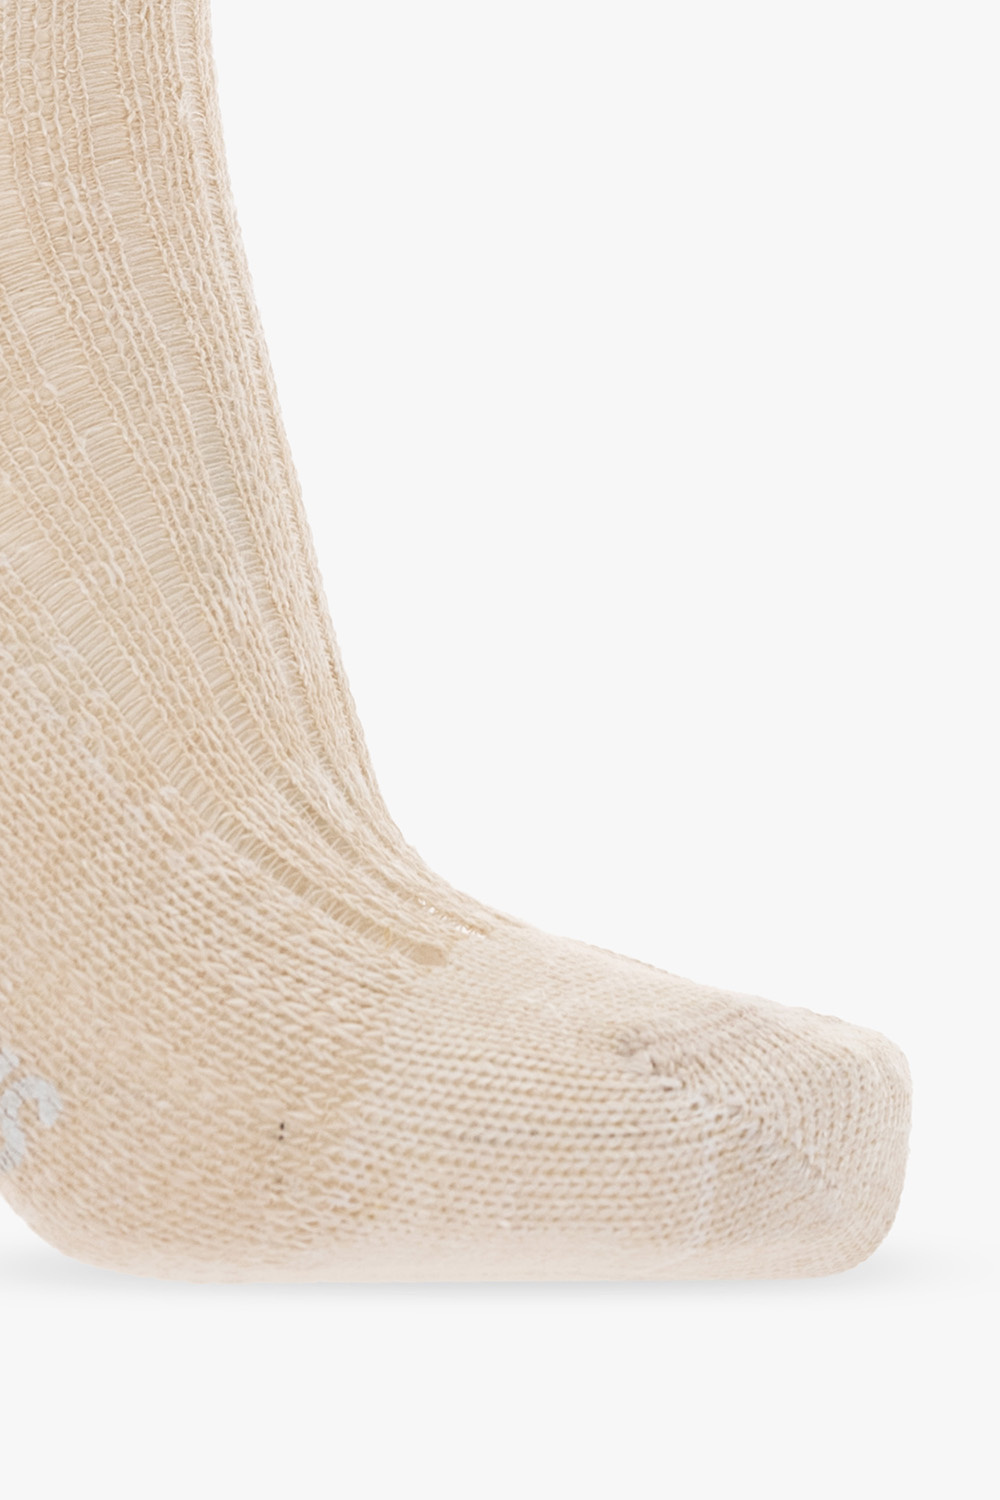 Jacquemus ‘Duna’ socks